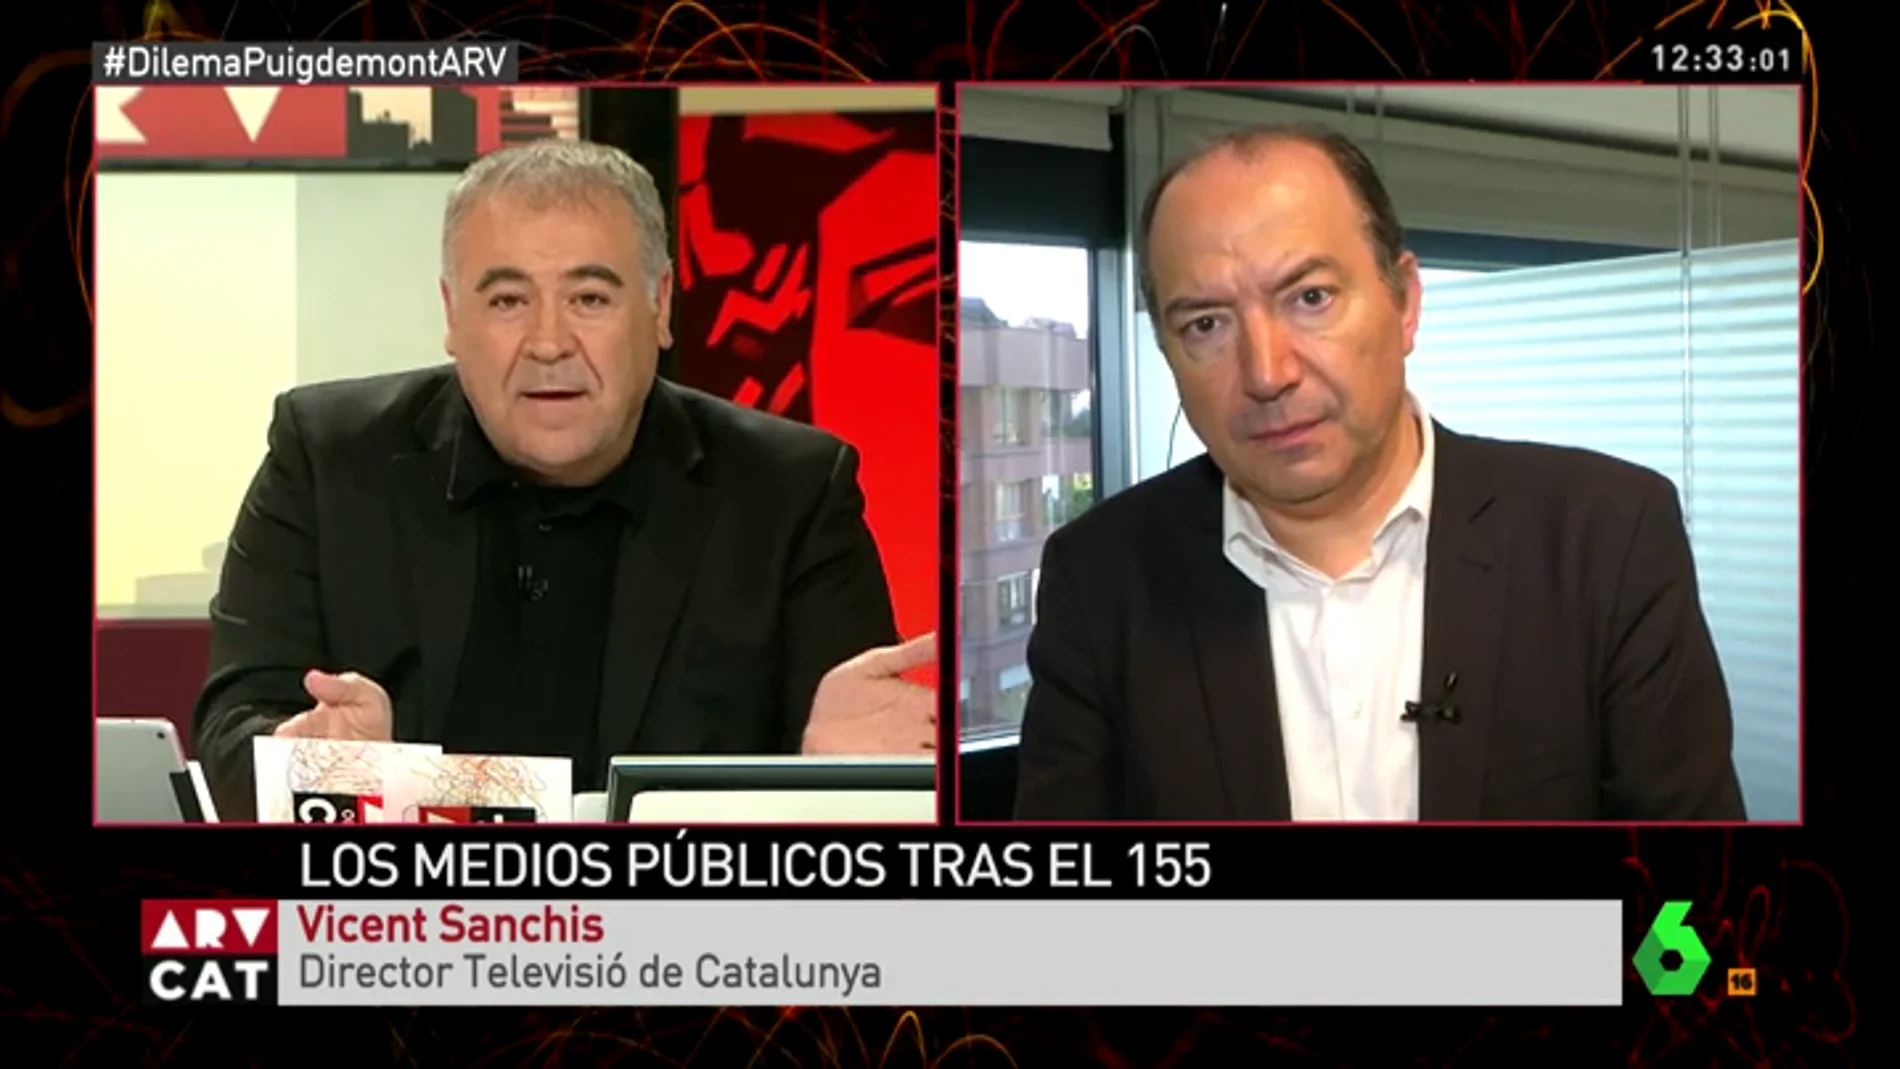 Vicent Sanchis, director de Televisió de Catalunya: "TV3 no tiene línea editorial"